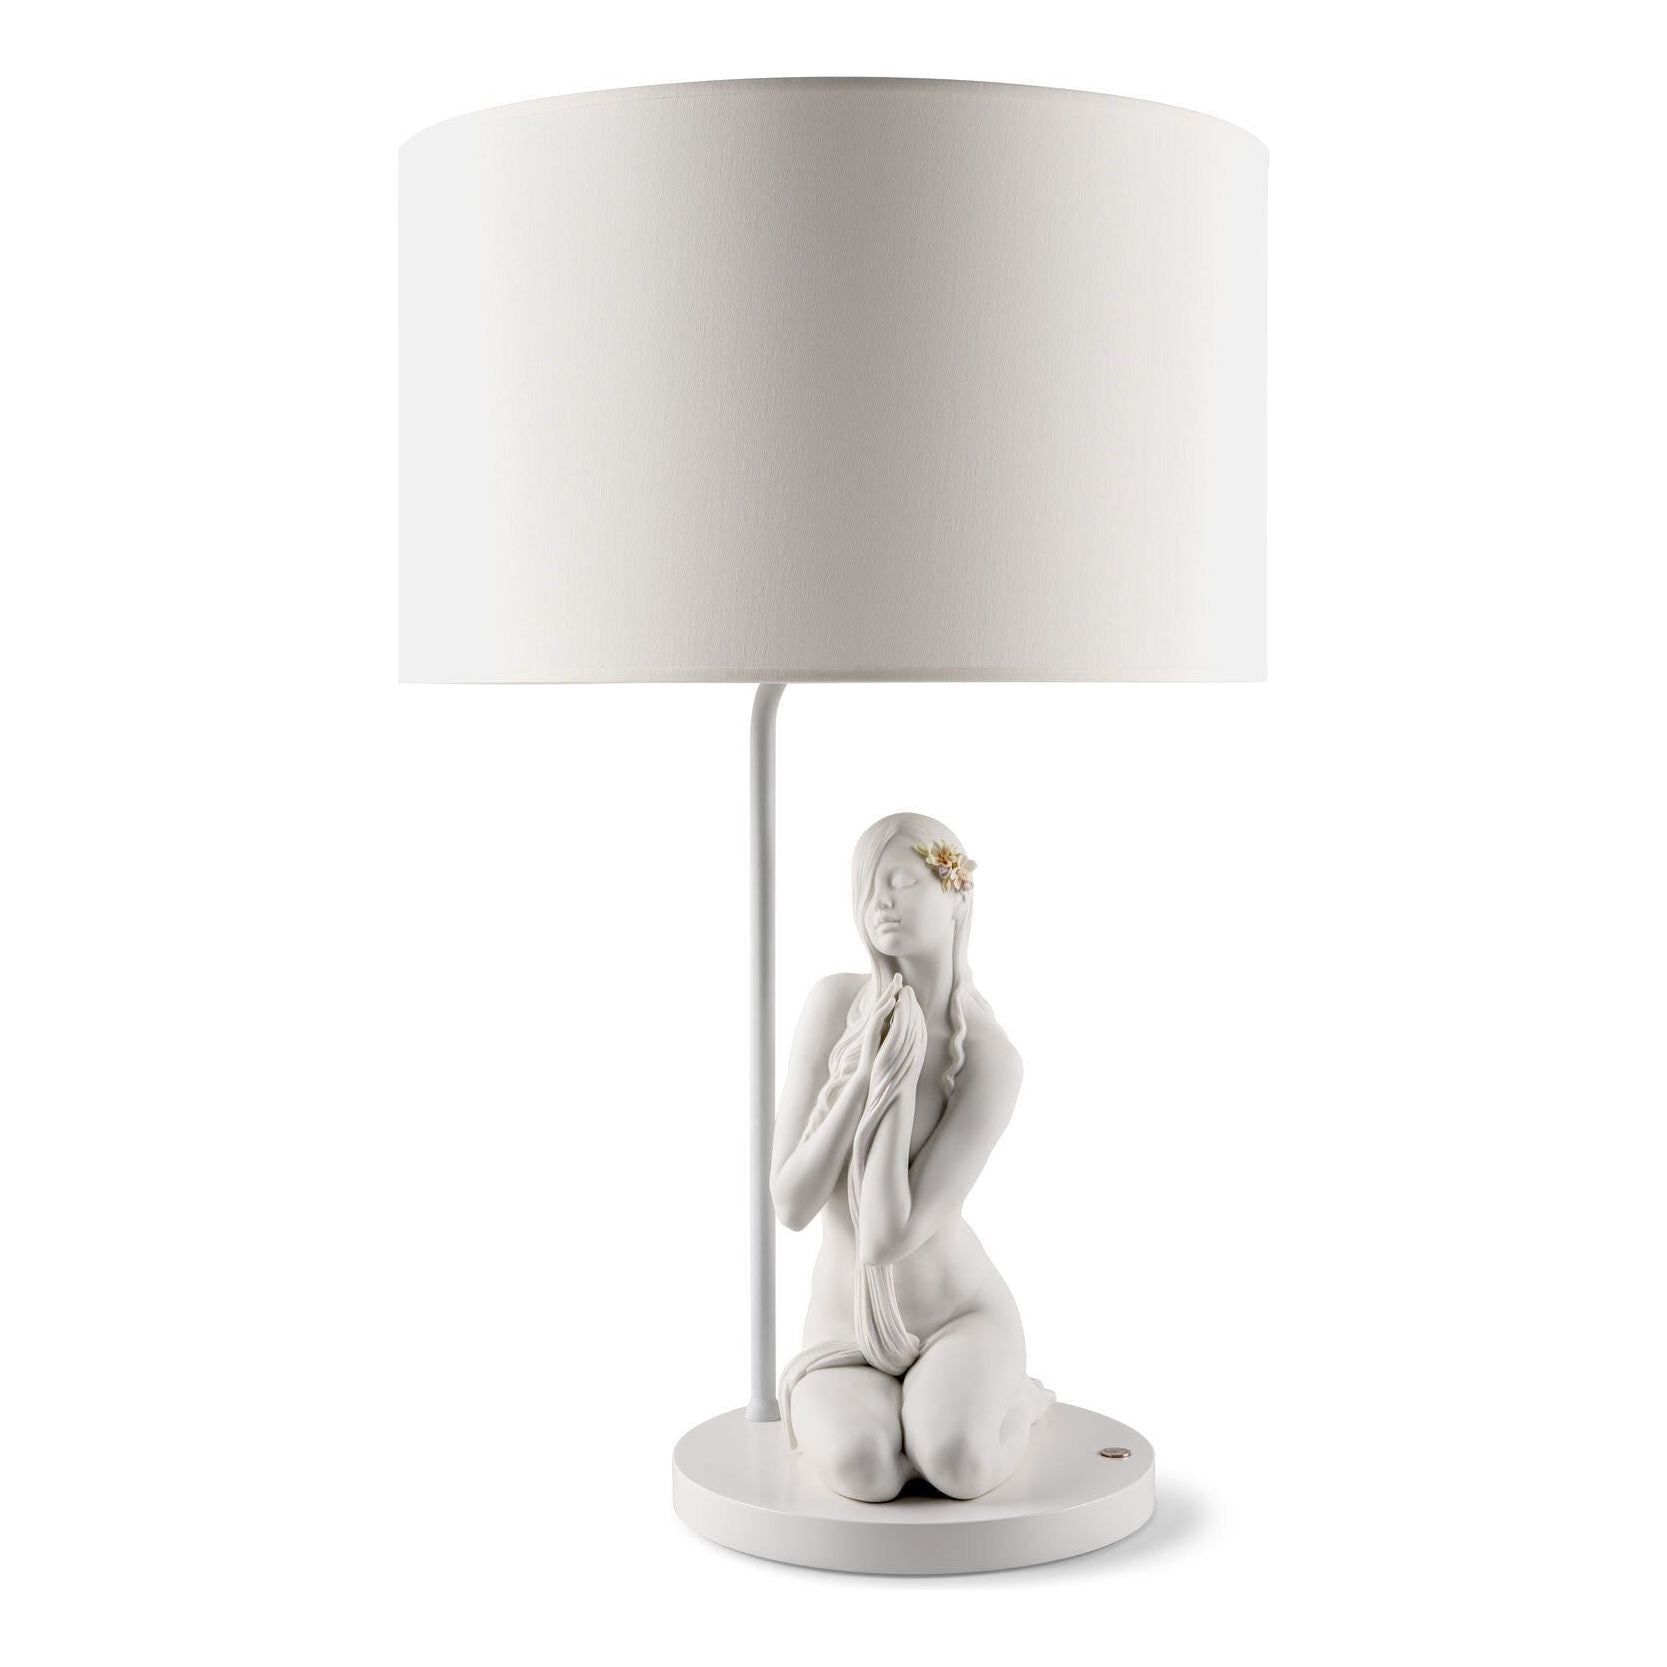 LladroInner Peace Table Lamp White1024270